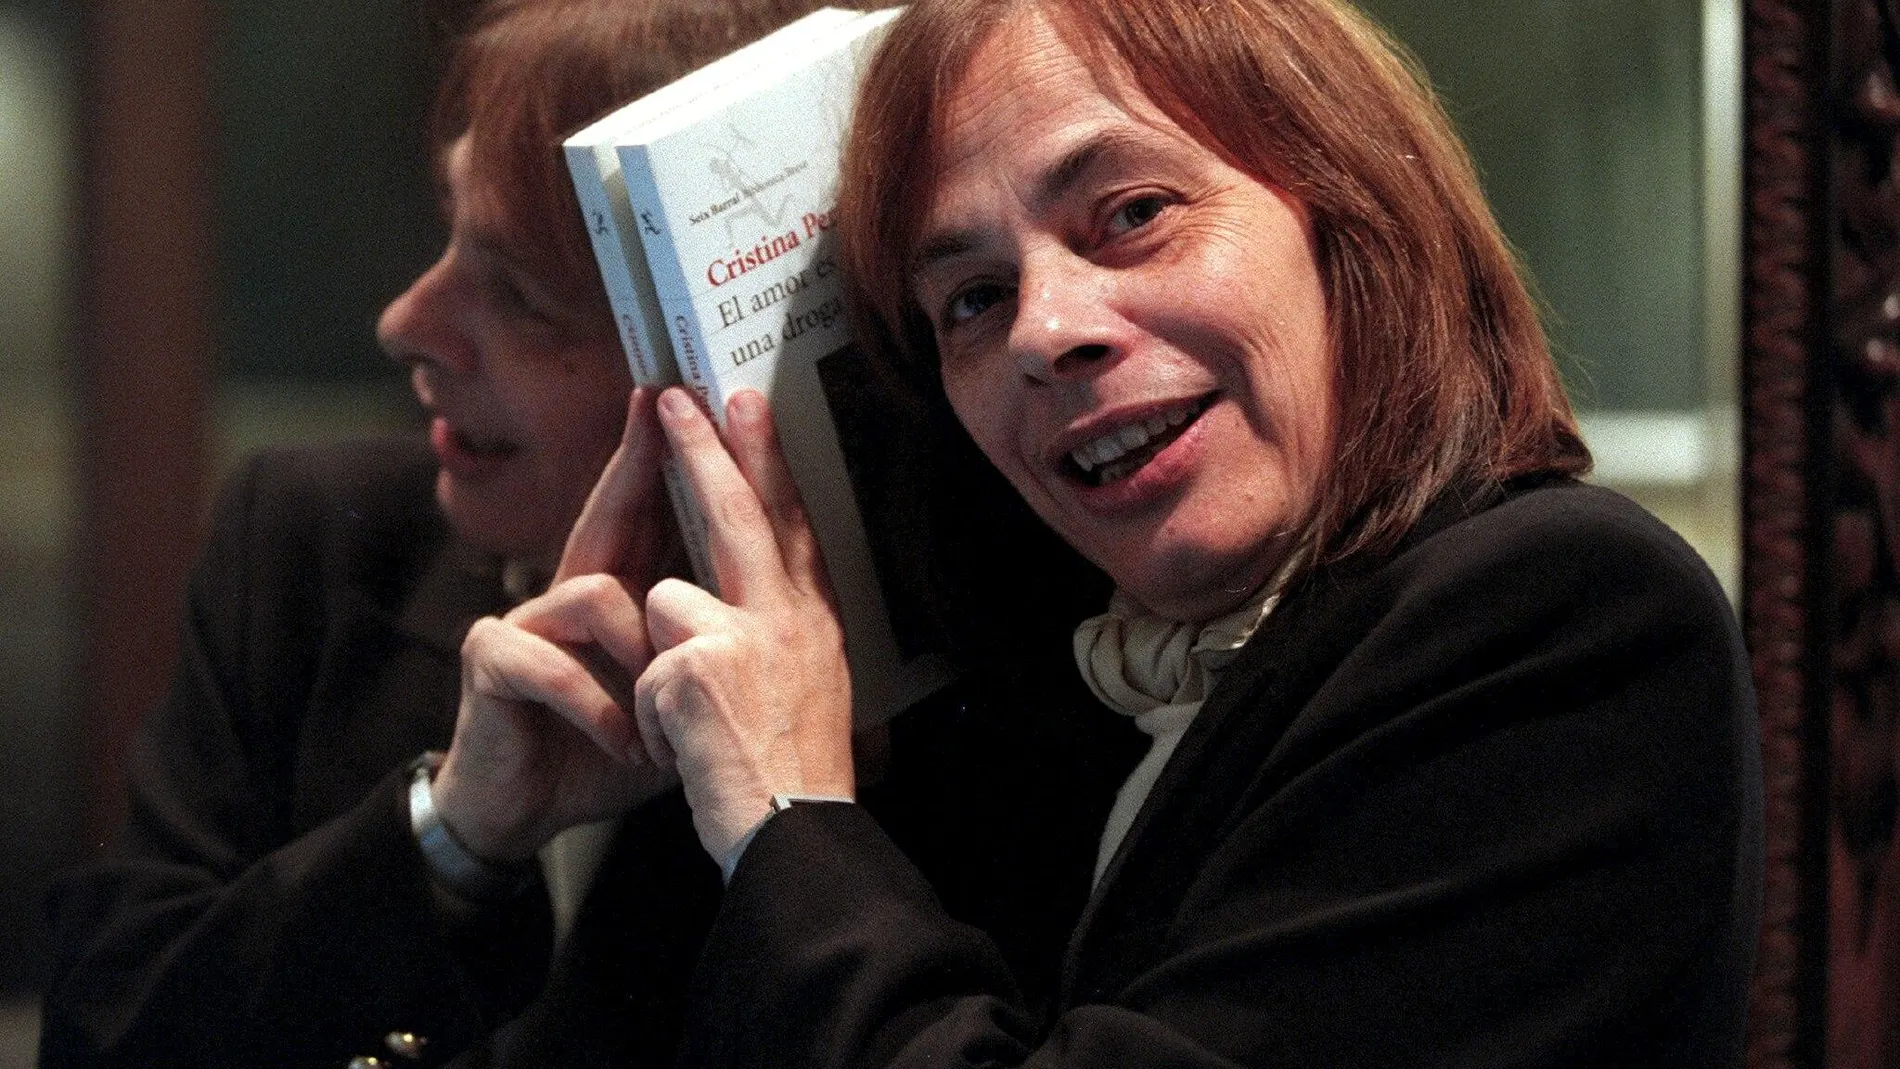 La escritora Cristina Peri Rossi con su novela "El amor es una droga dura"